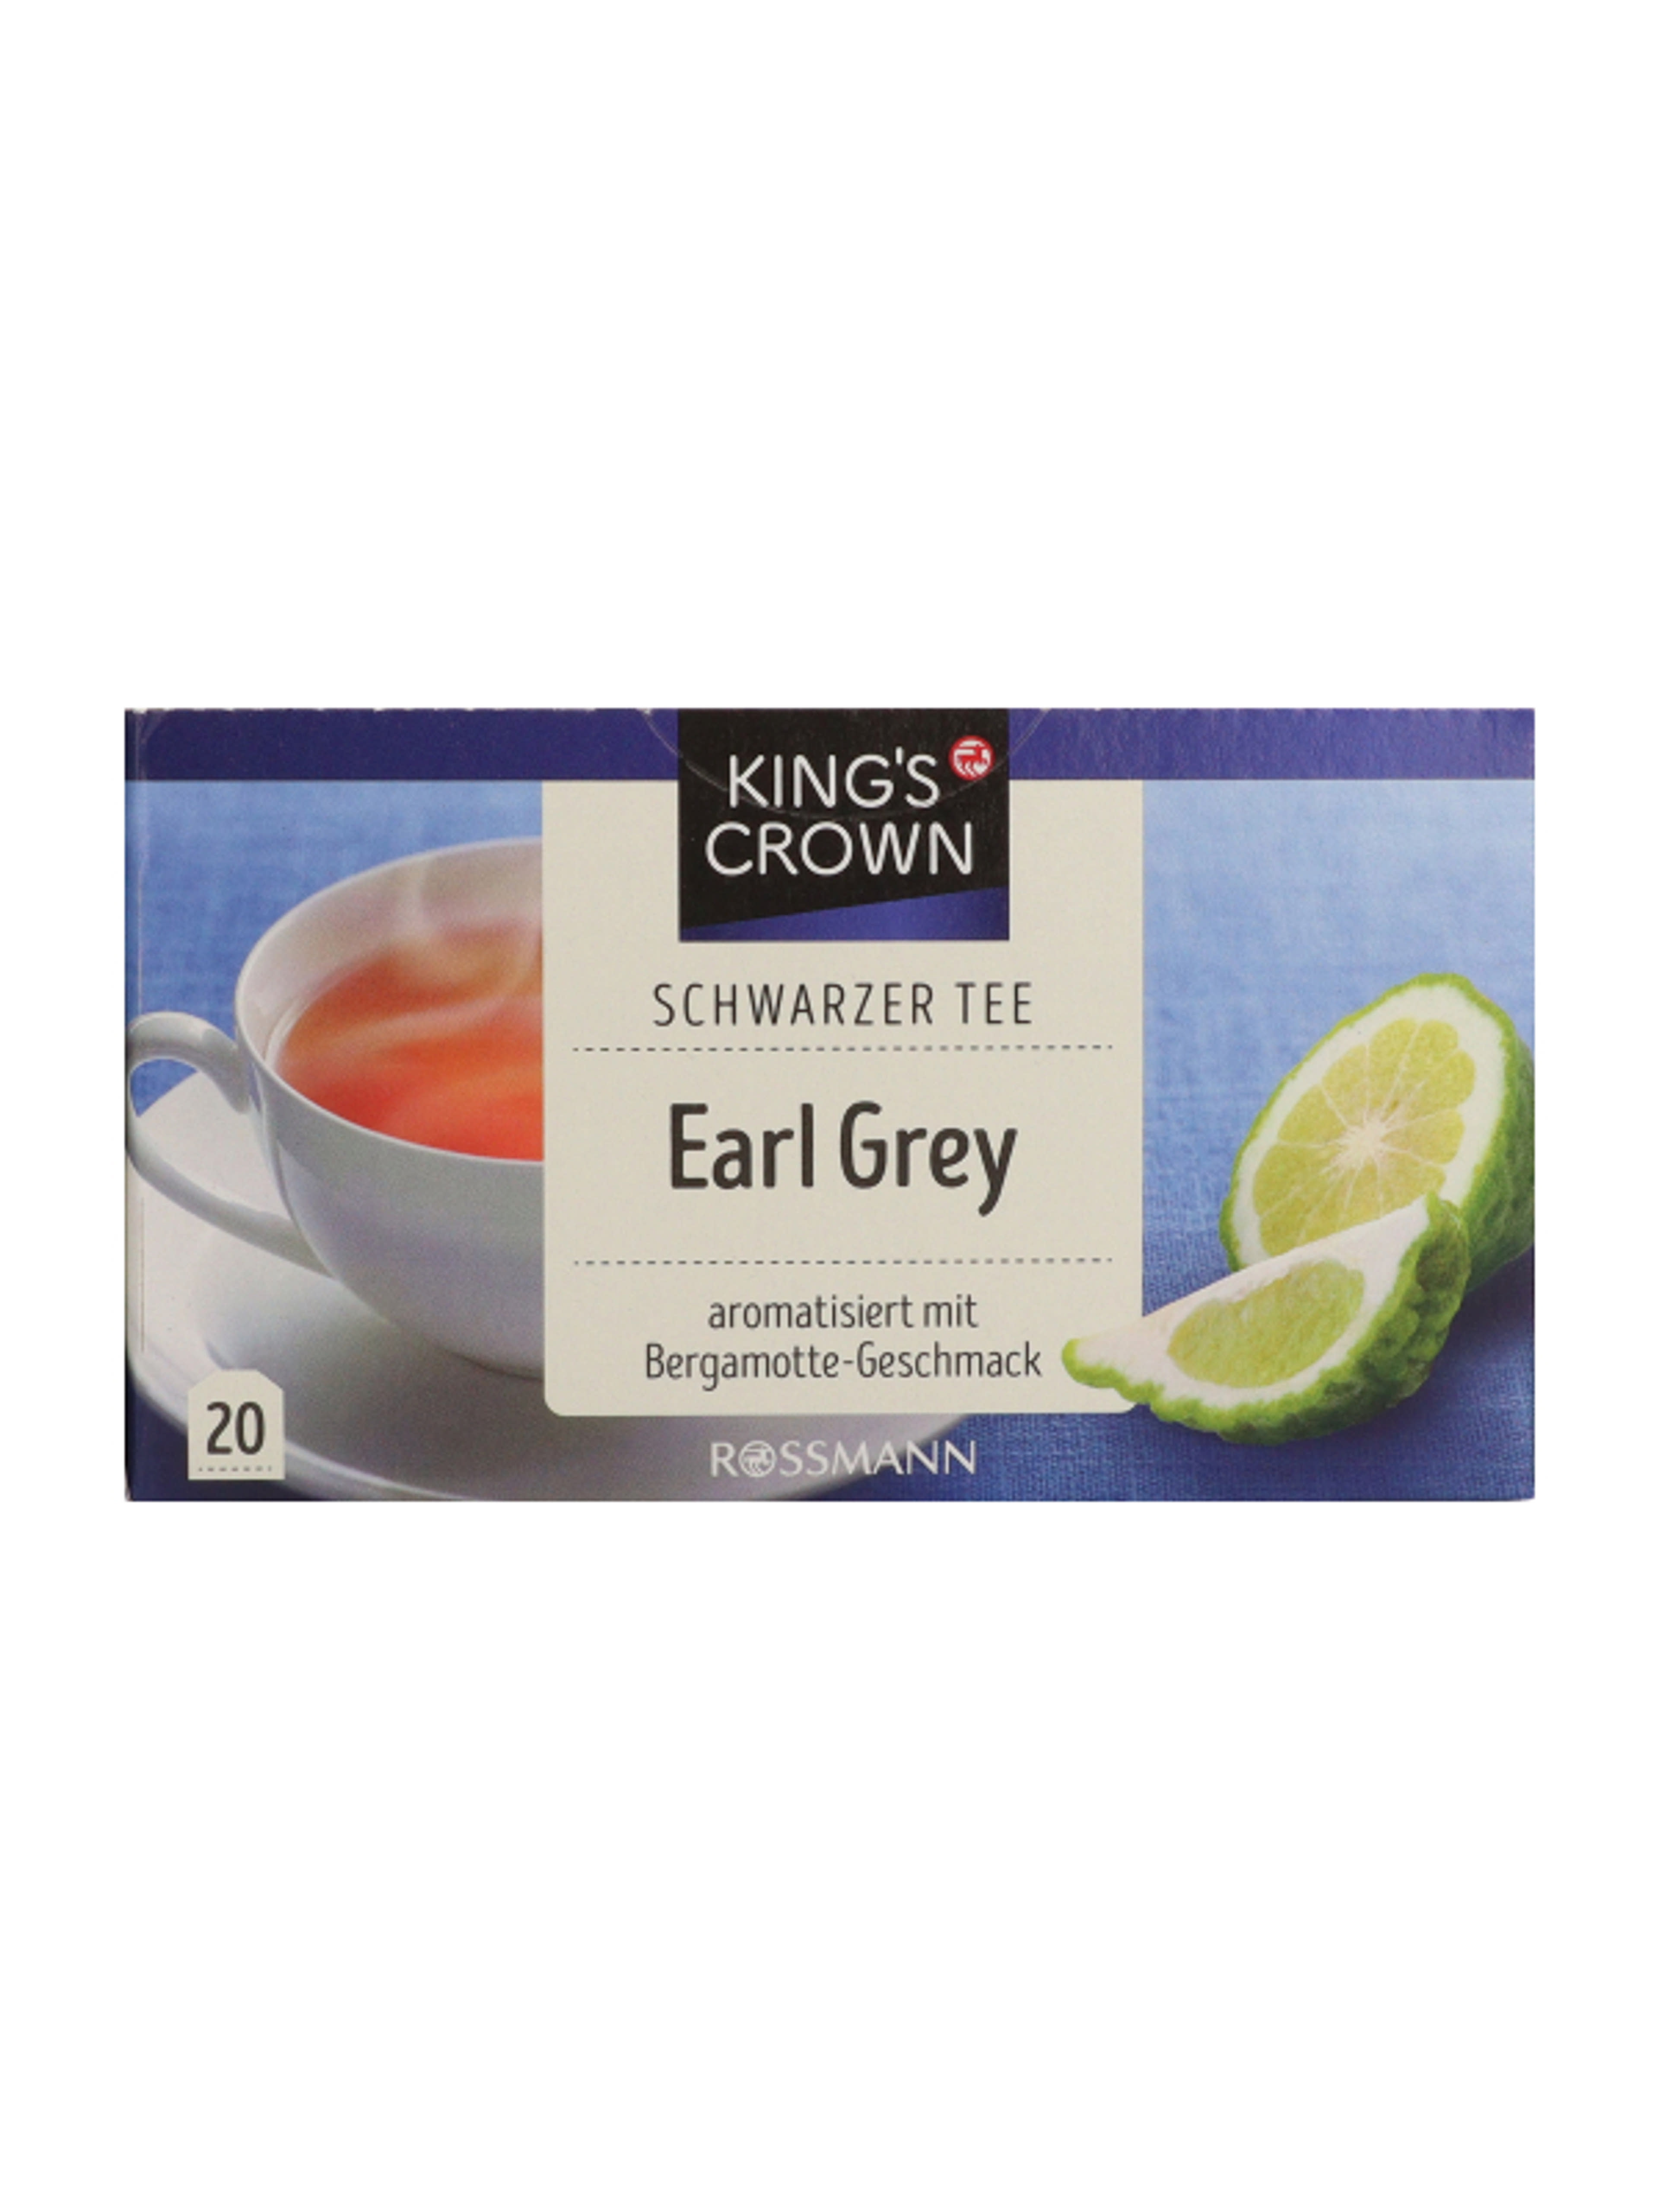 King's Crown Early Grey tea - 35 g